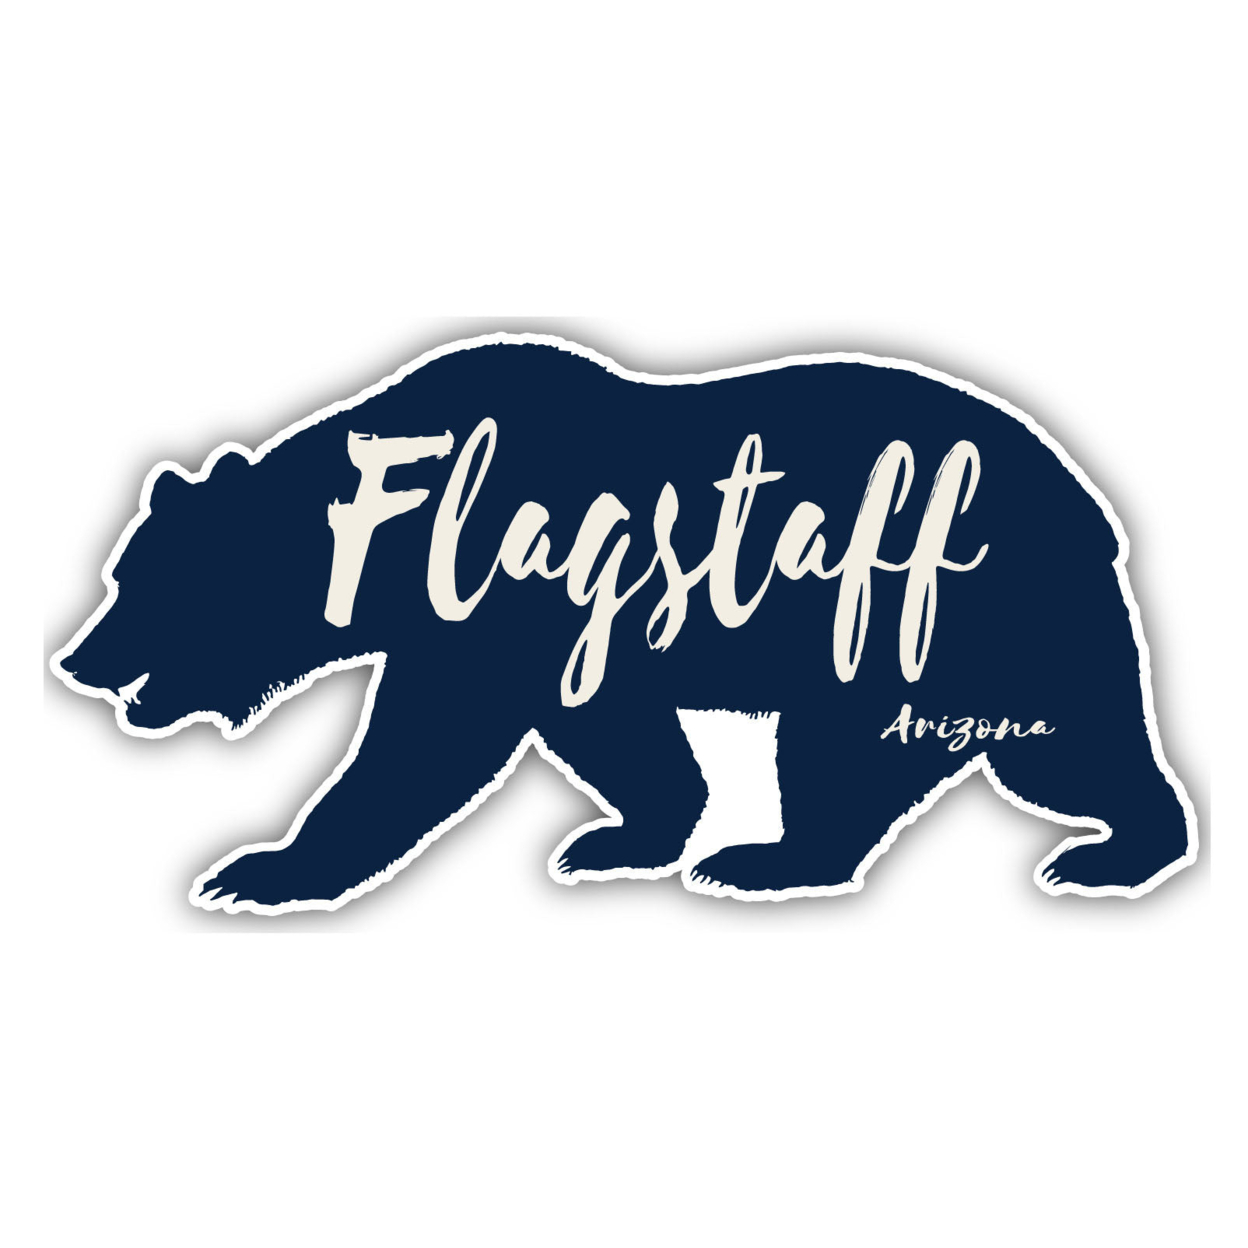 Flagstaff Arizona Souvenir Decorative Stickers (Choose Theme And Size) - Single Unit, 2-Inch, Camp Life